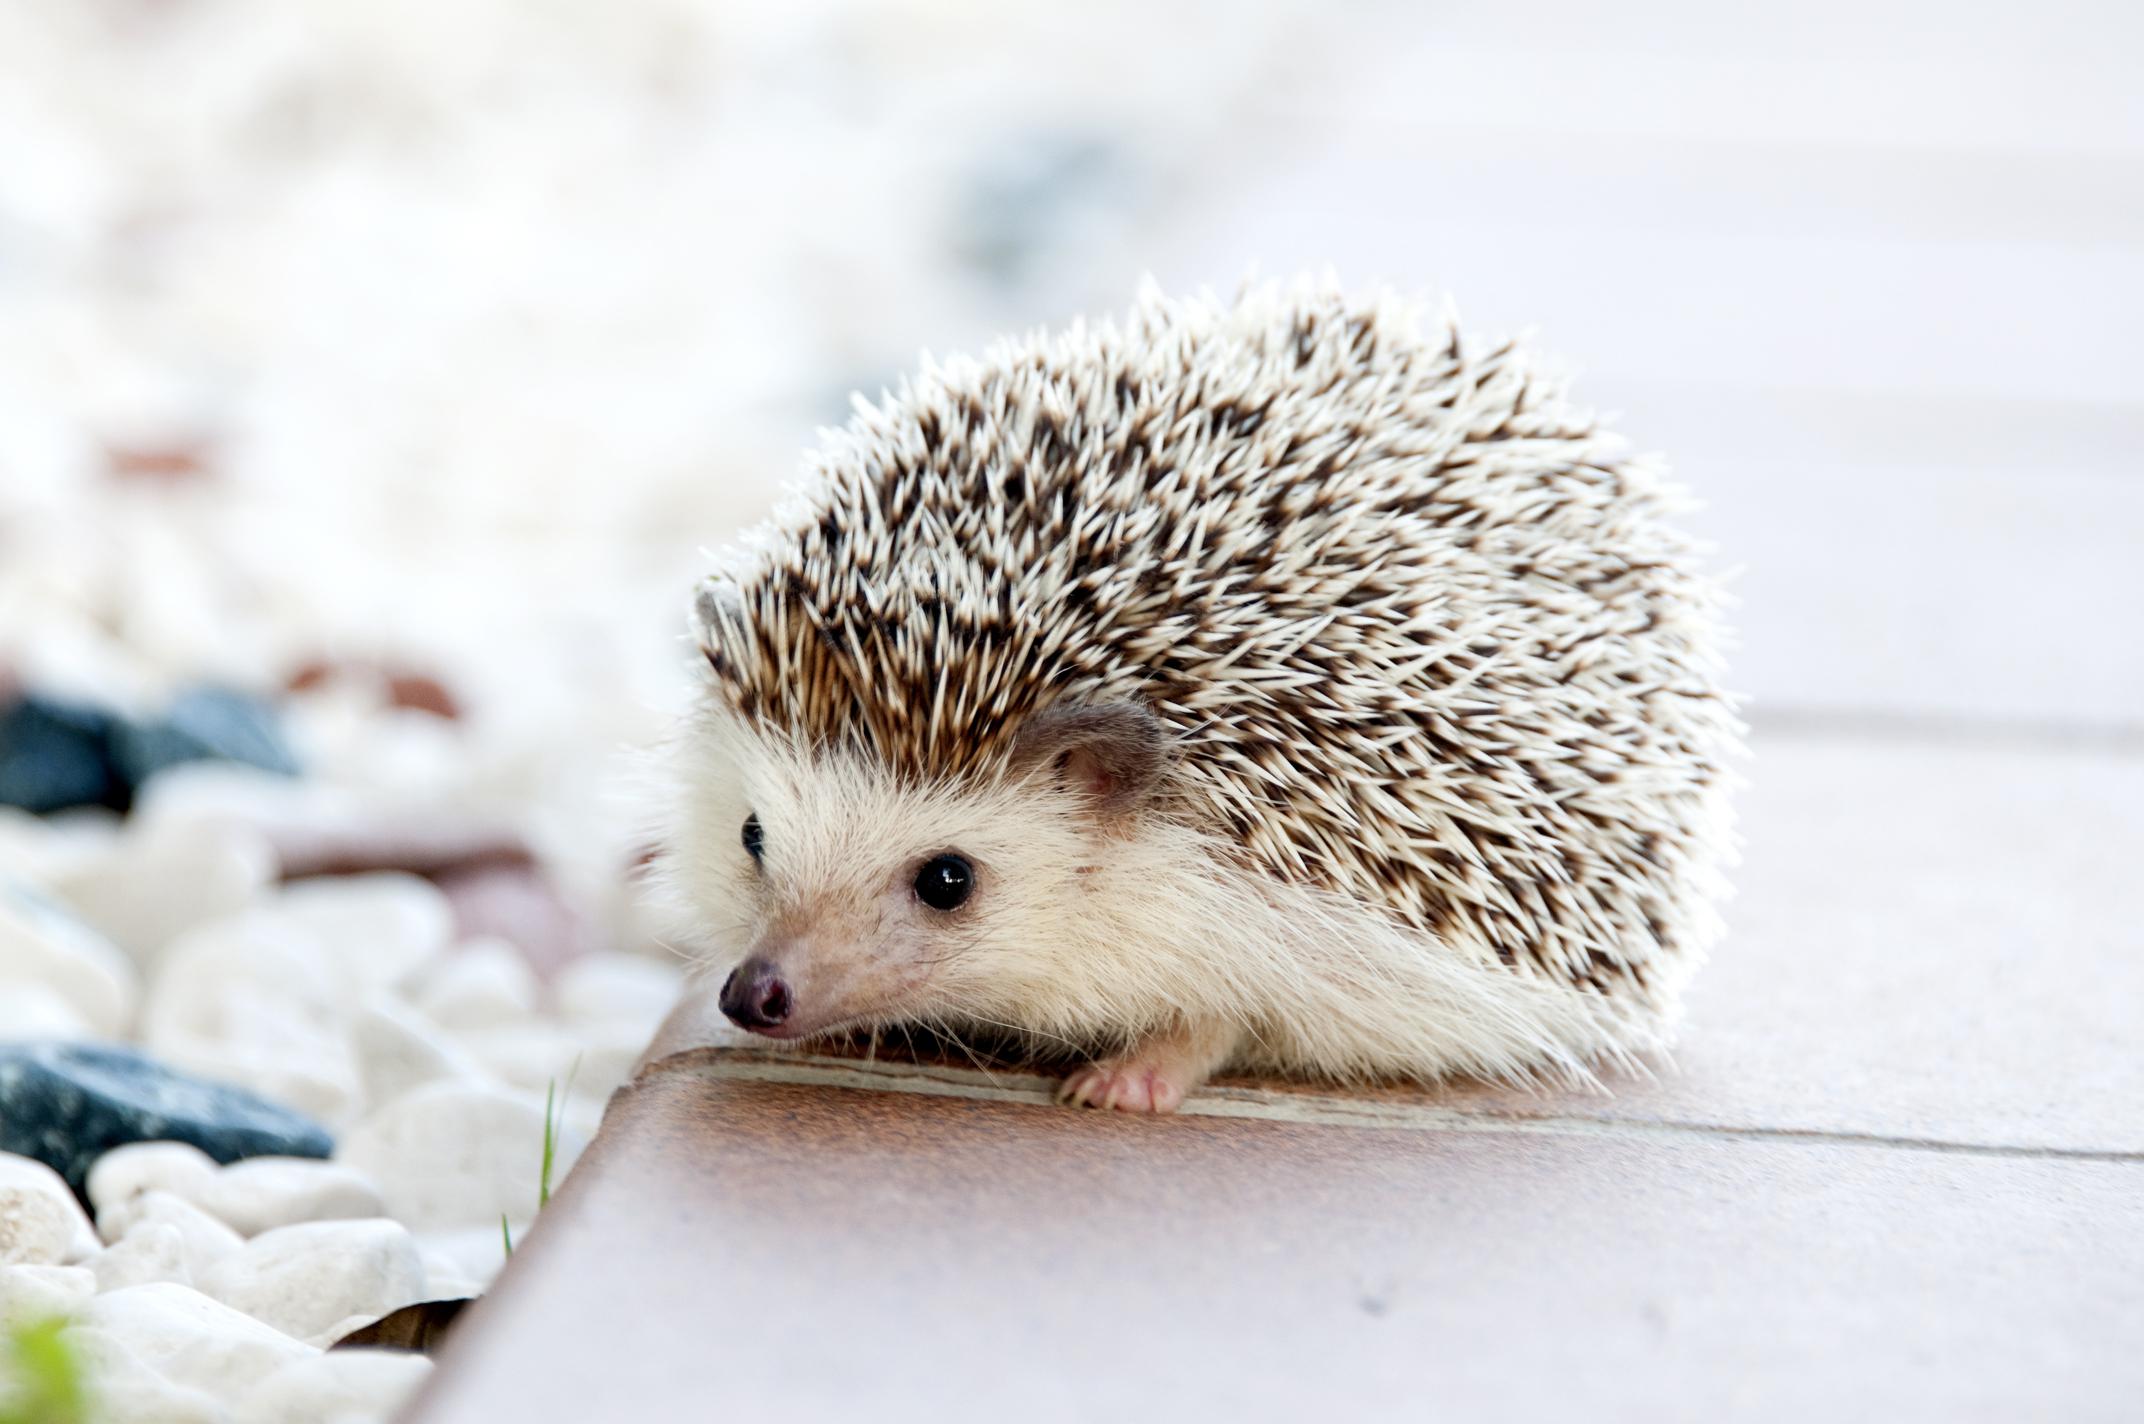 How to identify a hedgehog